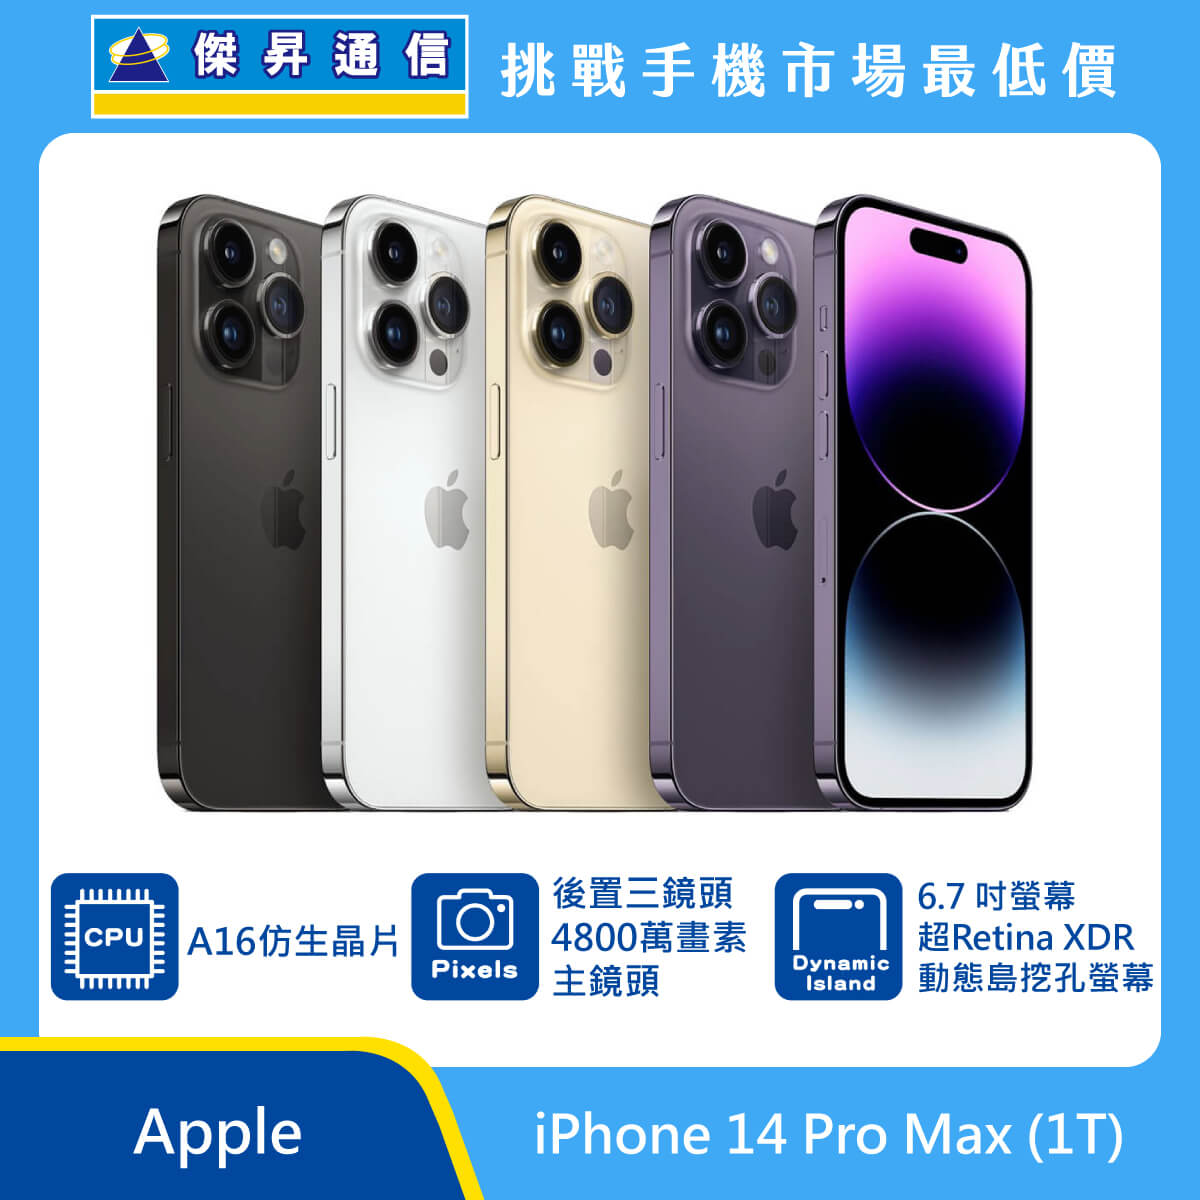 Apple iPhone 14 Pro Max (1T)